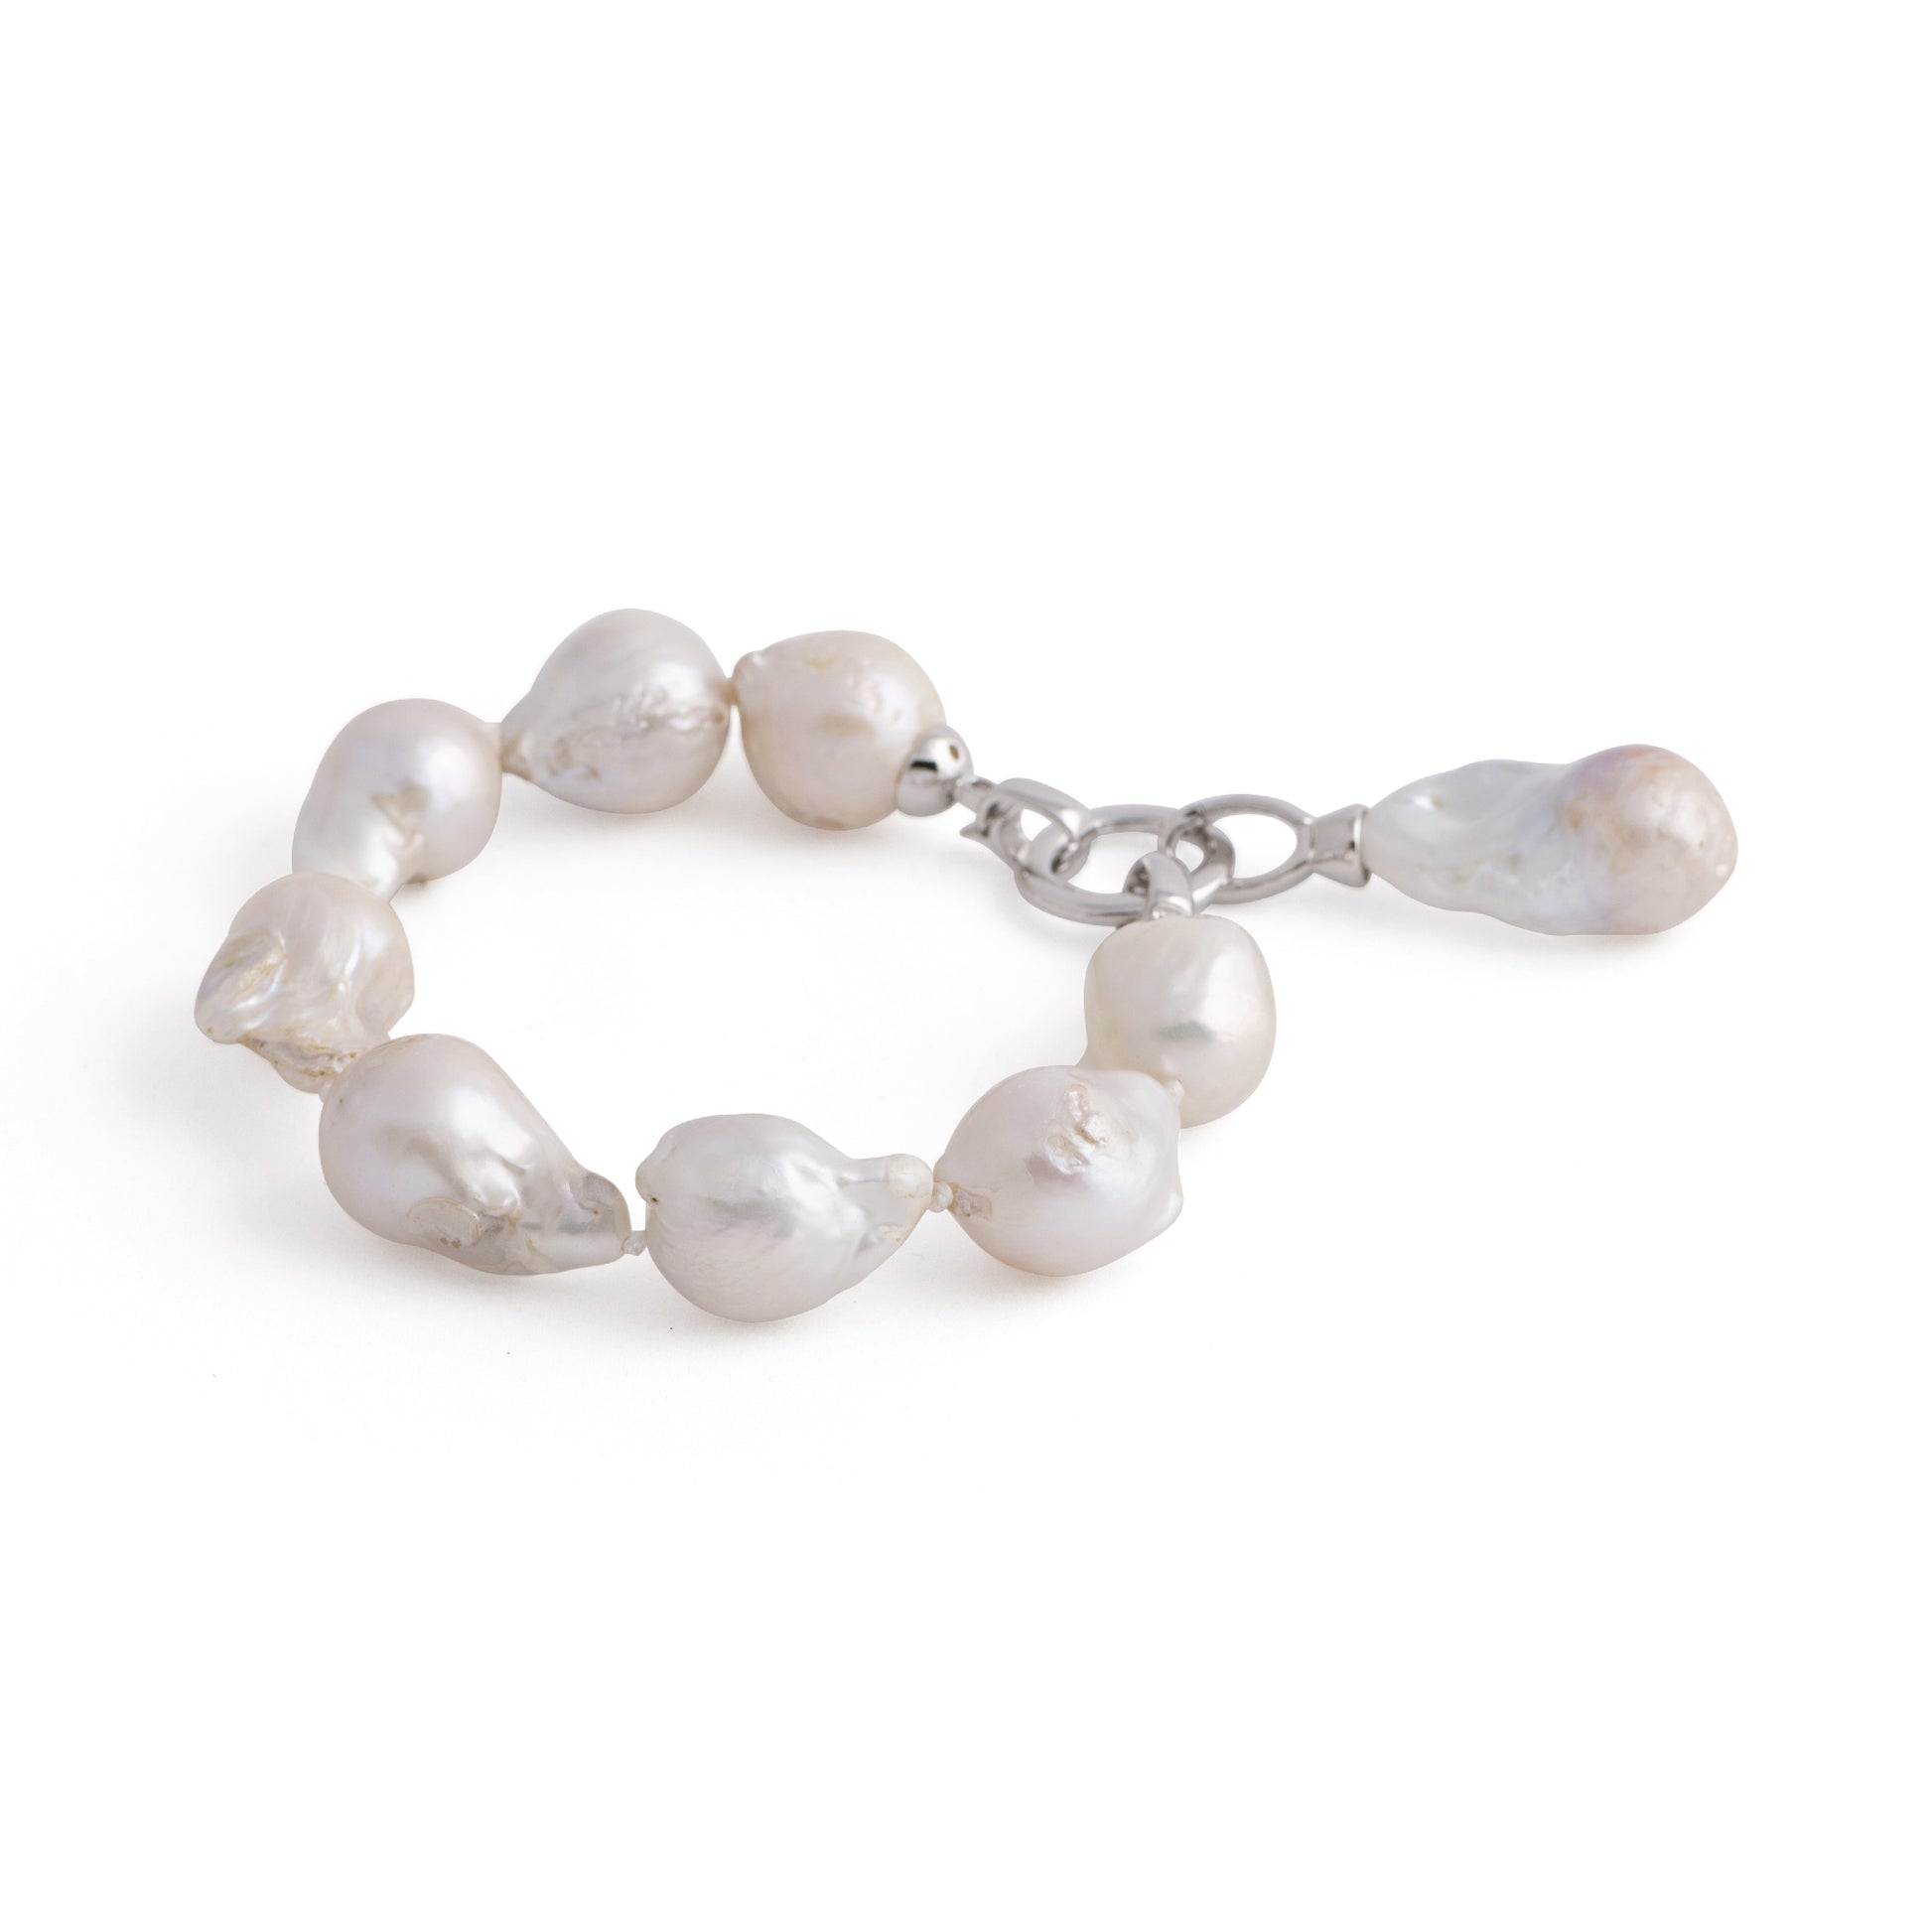 Nile - Baroque pearl charm bracelet (White pearls)